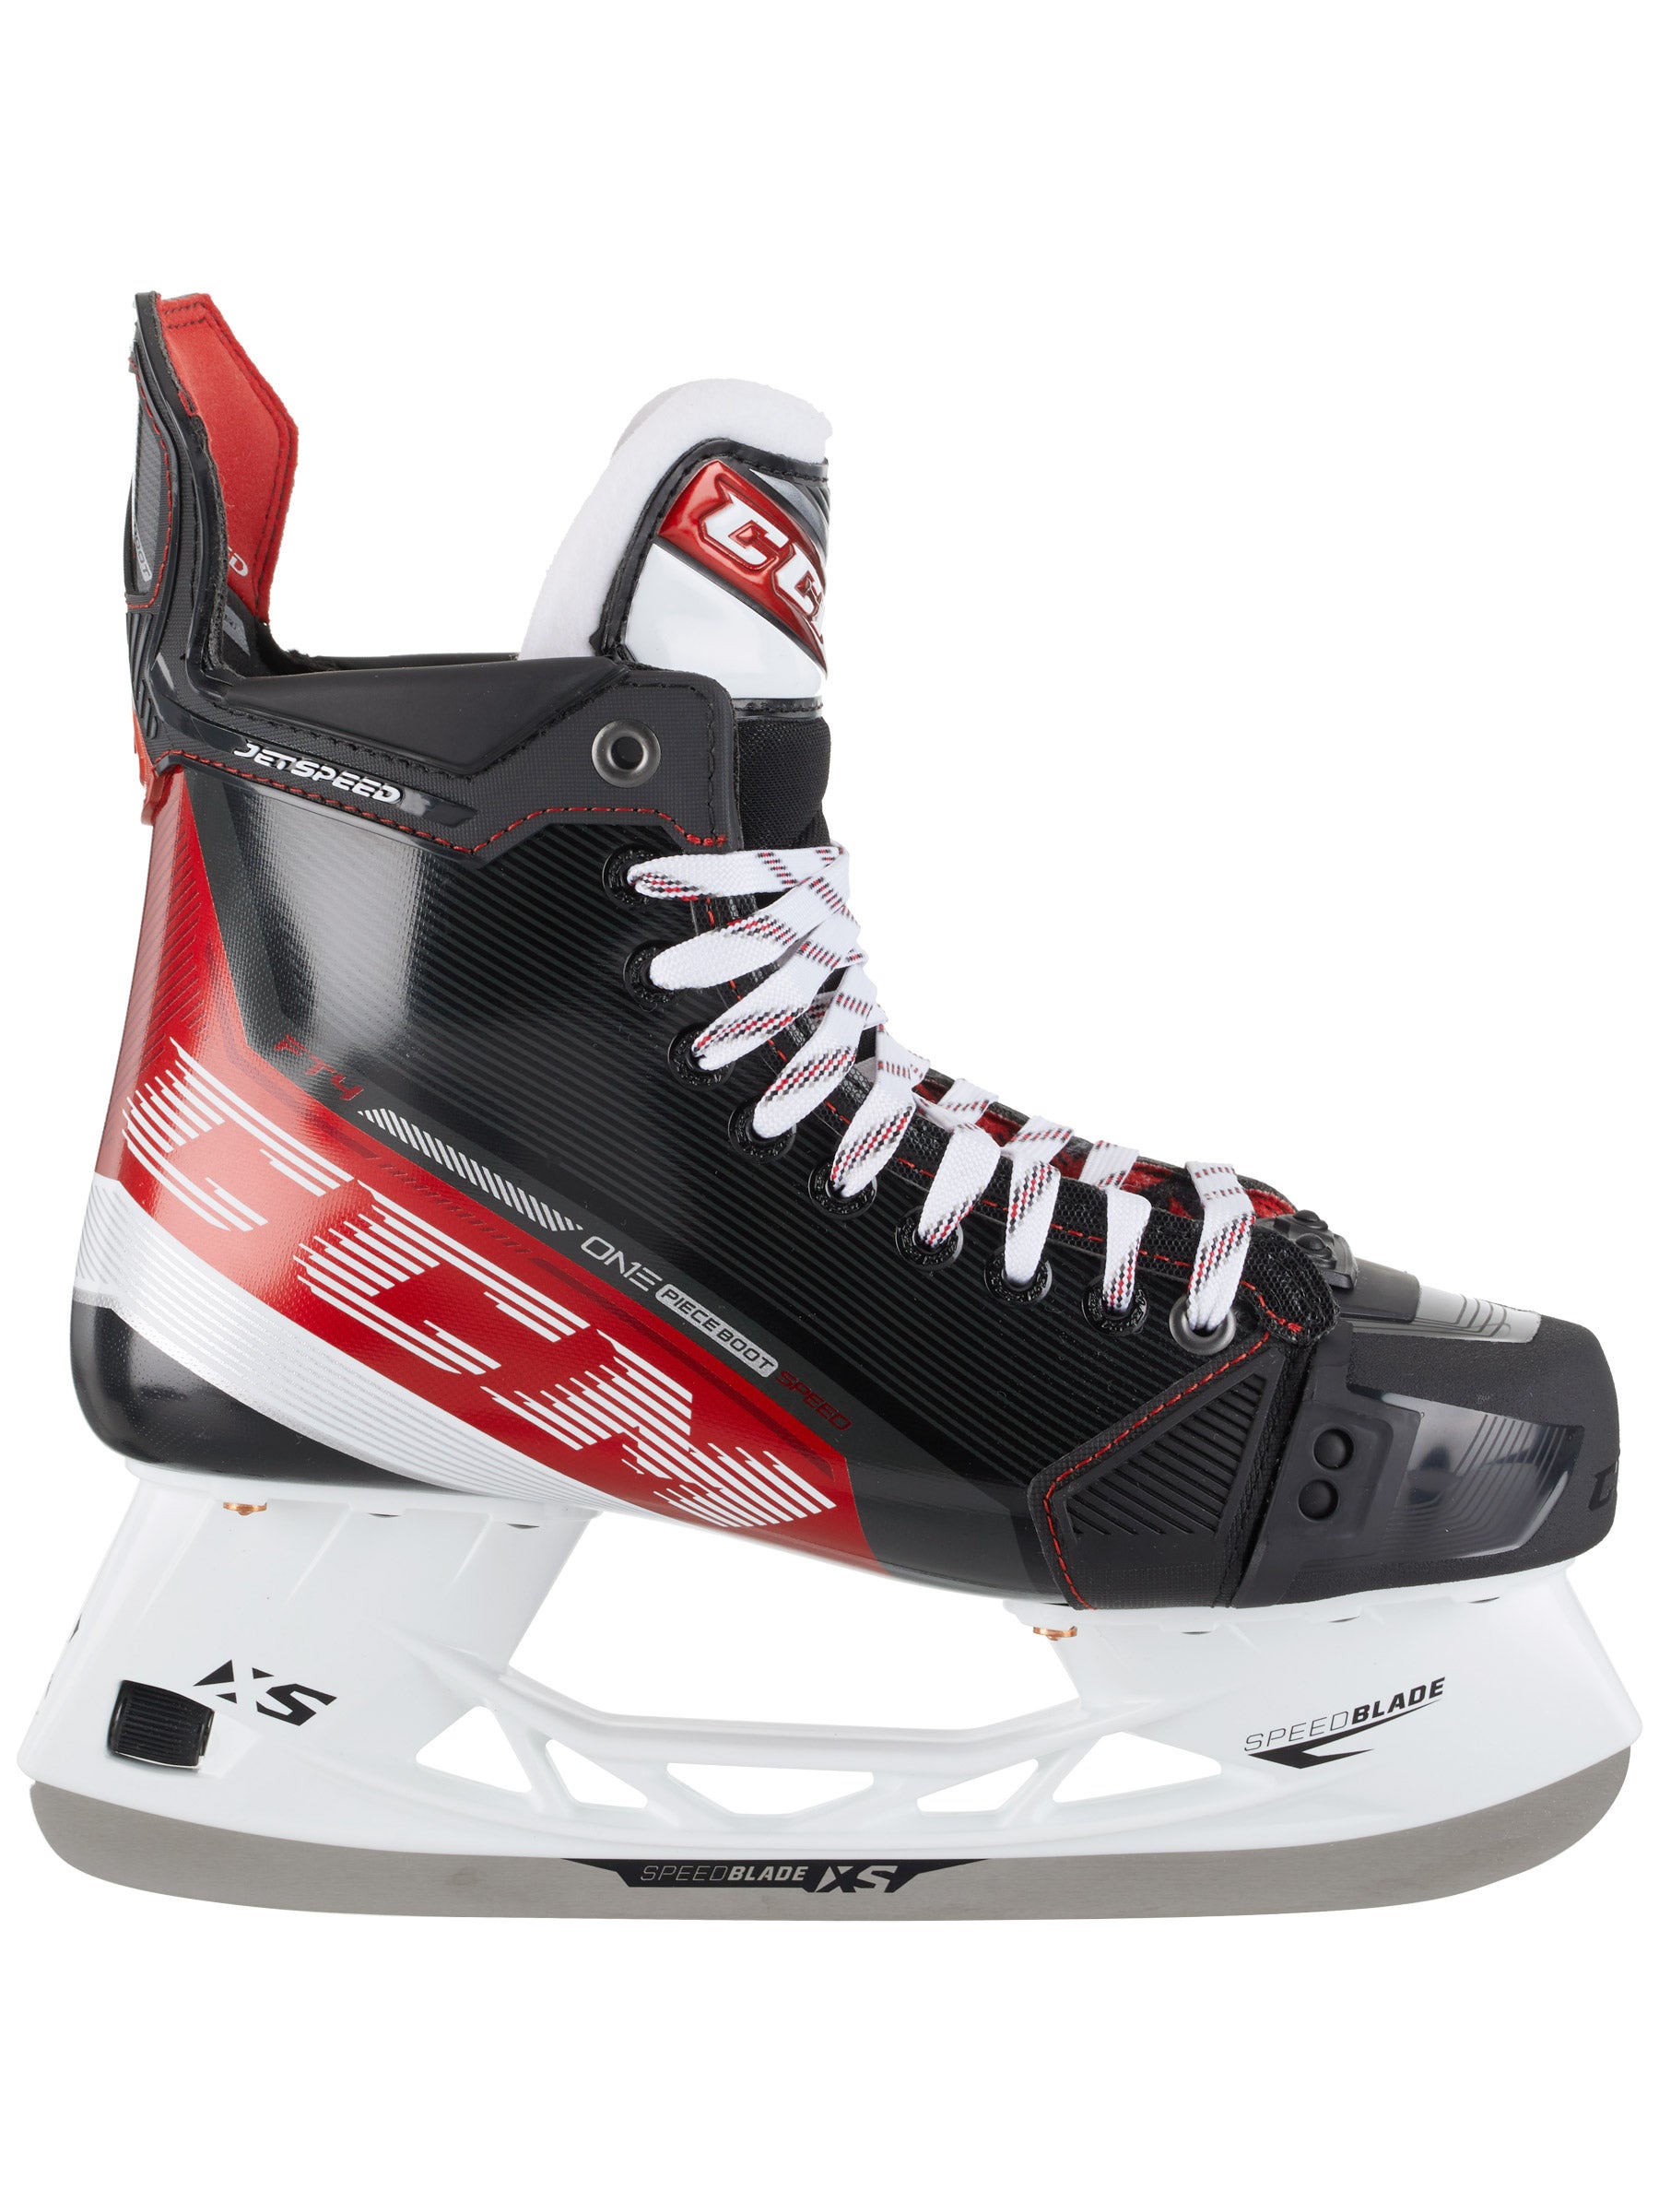 New CCM RBZ 60 ice hockey skates junior size 3.5 D black regular width skate jr 